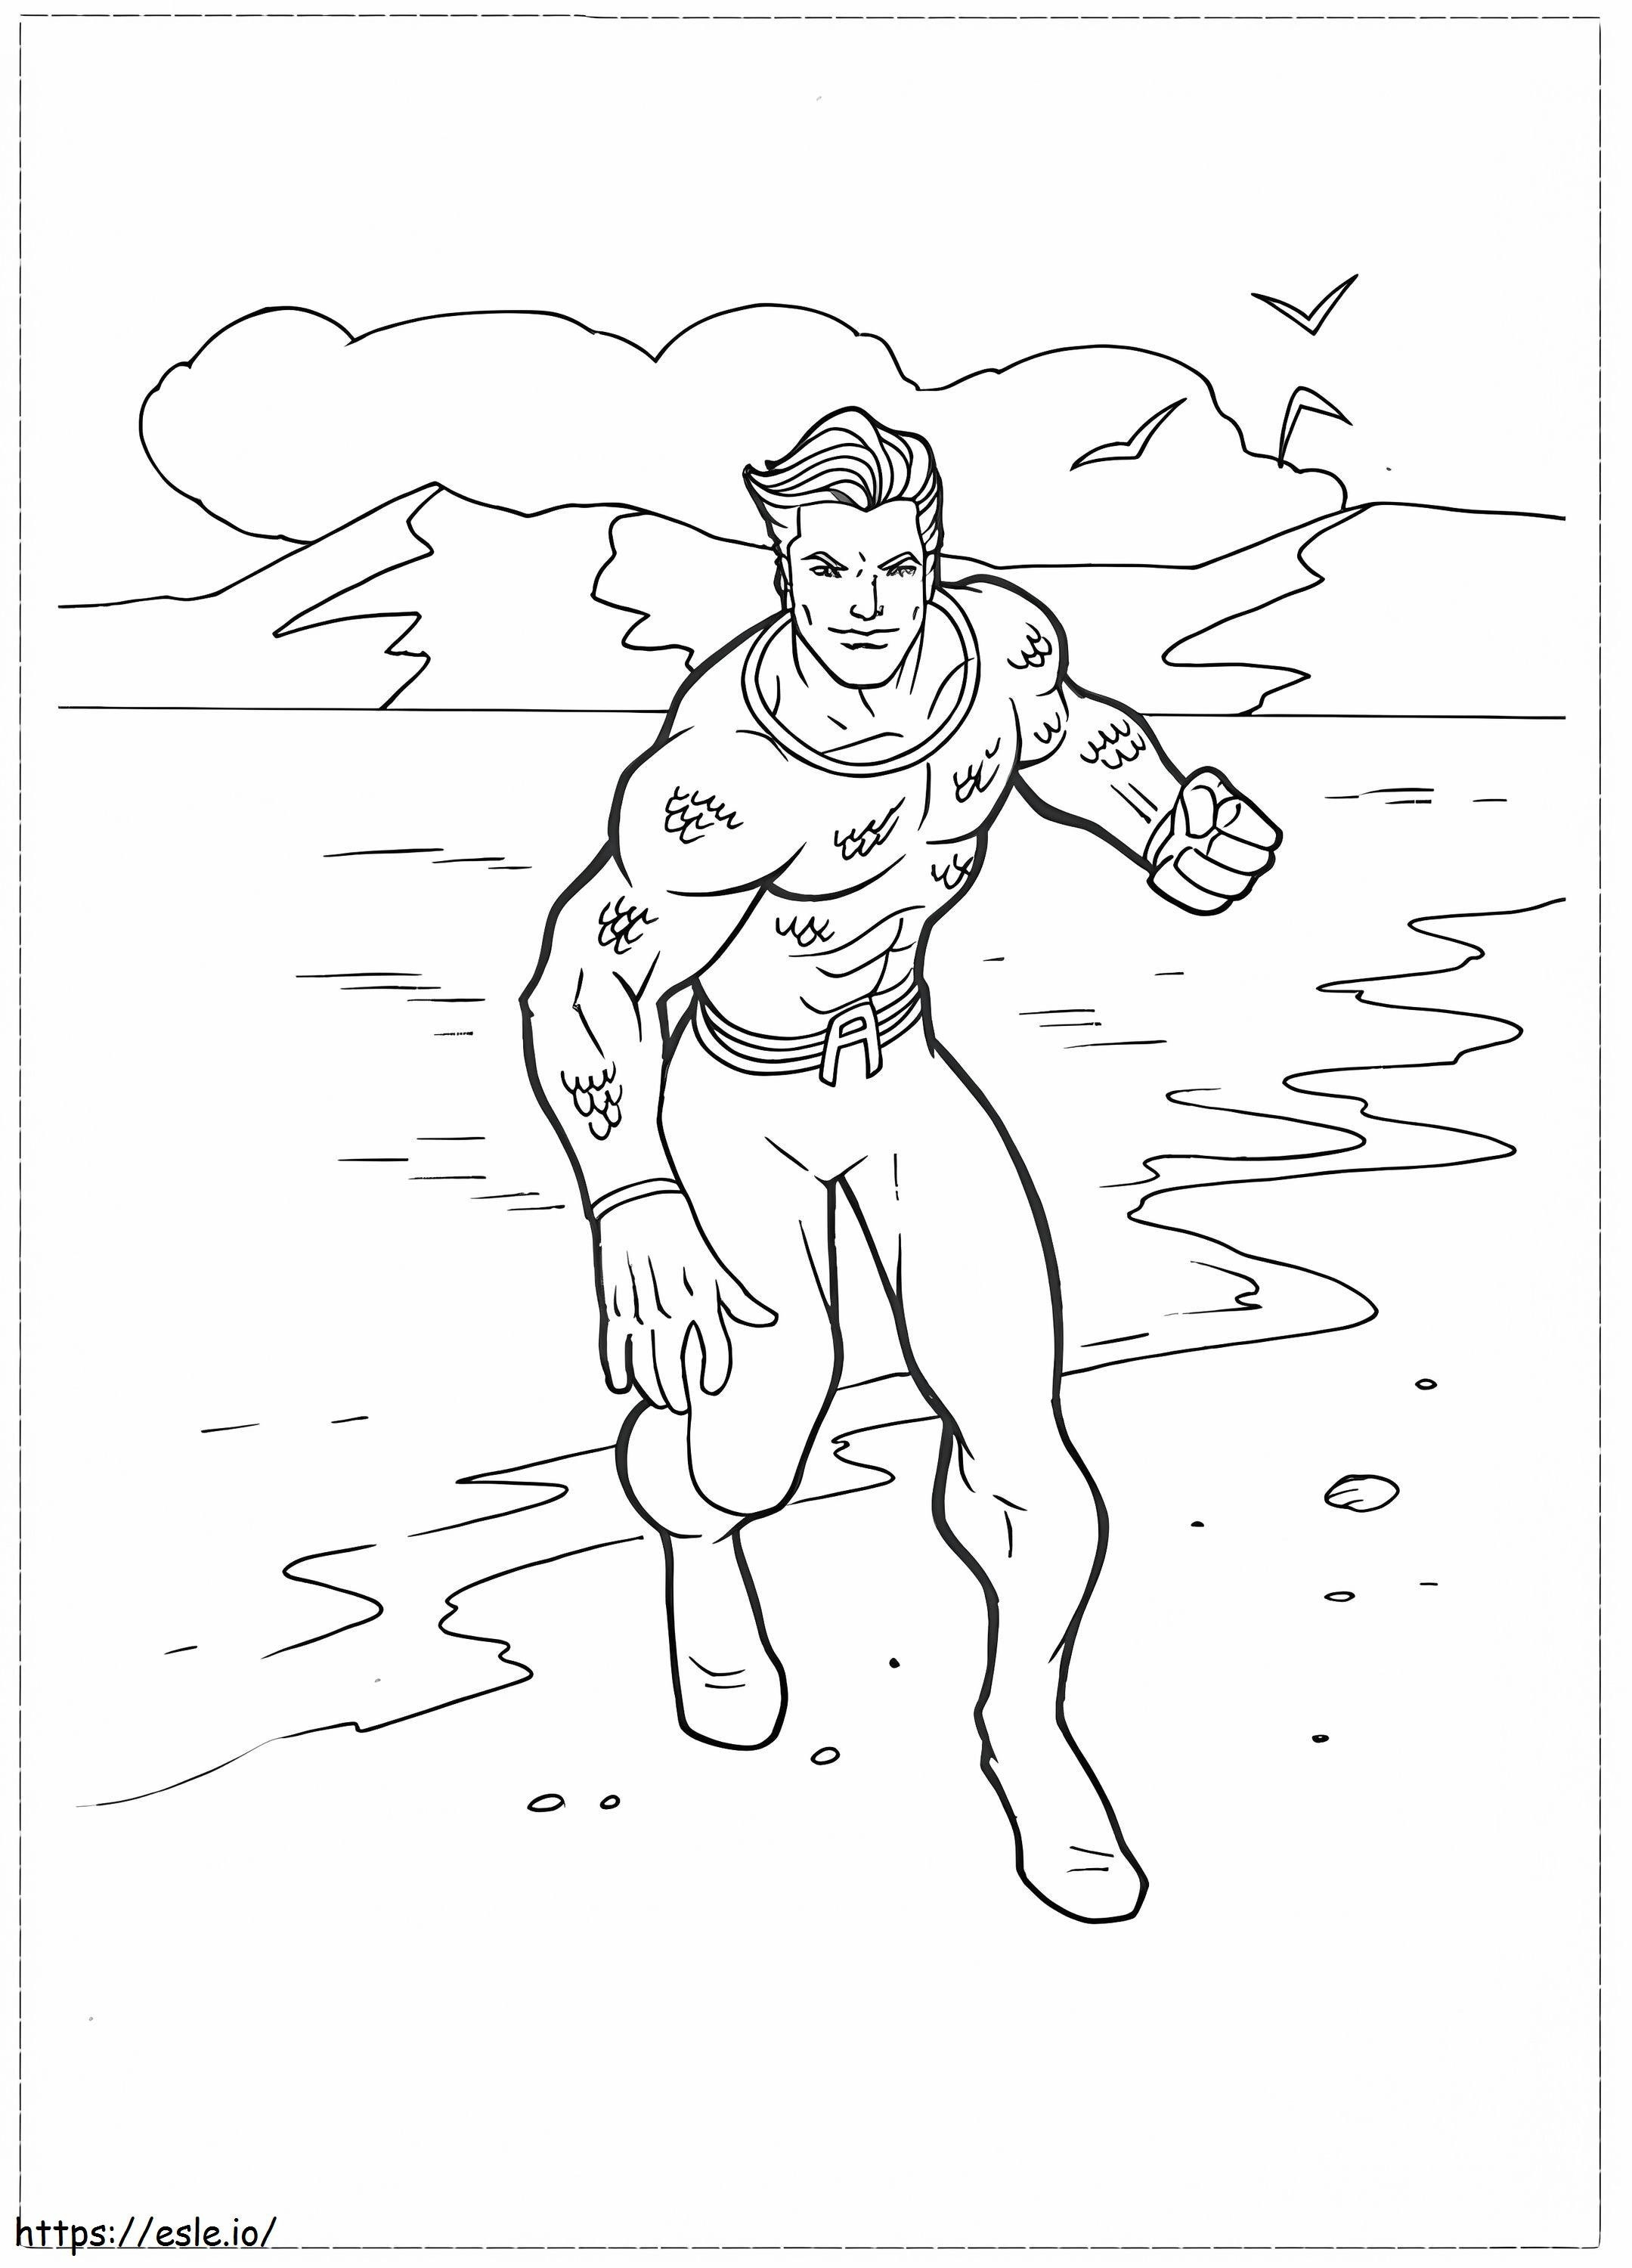 Cool Aquaman Attack coloring page